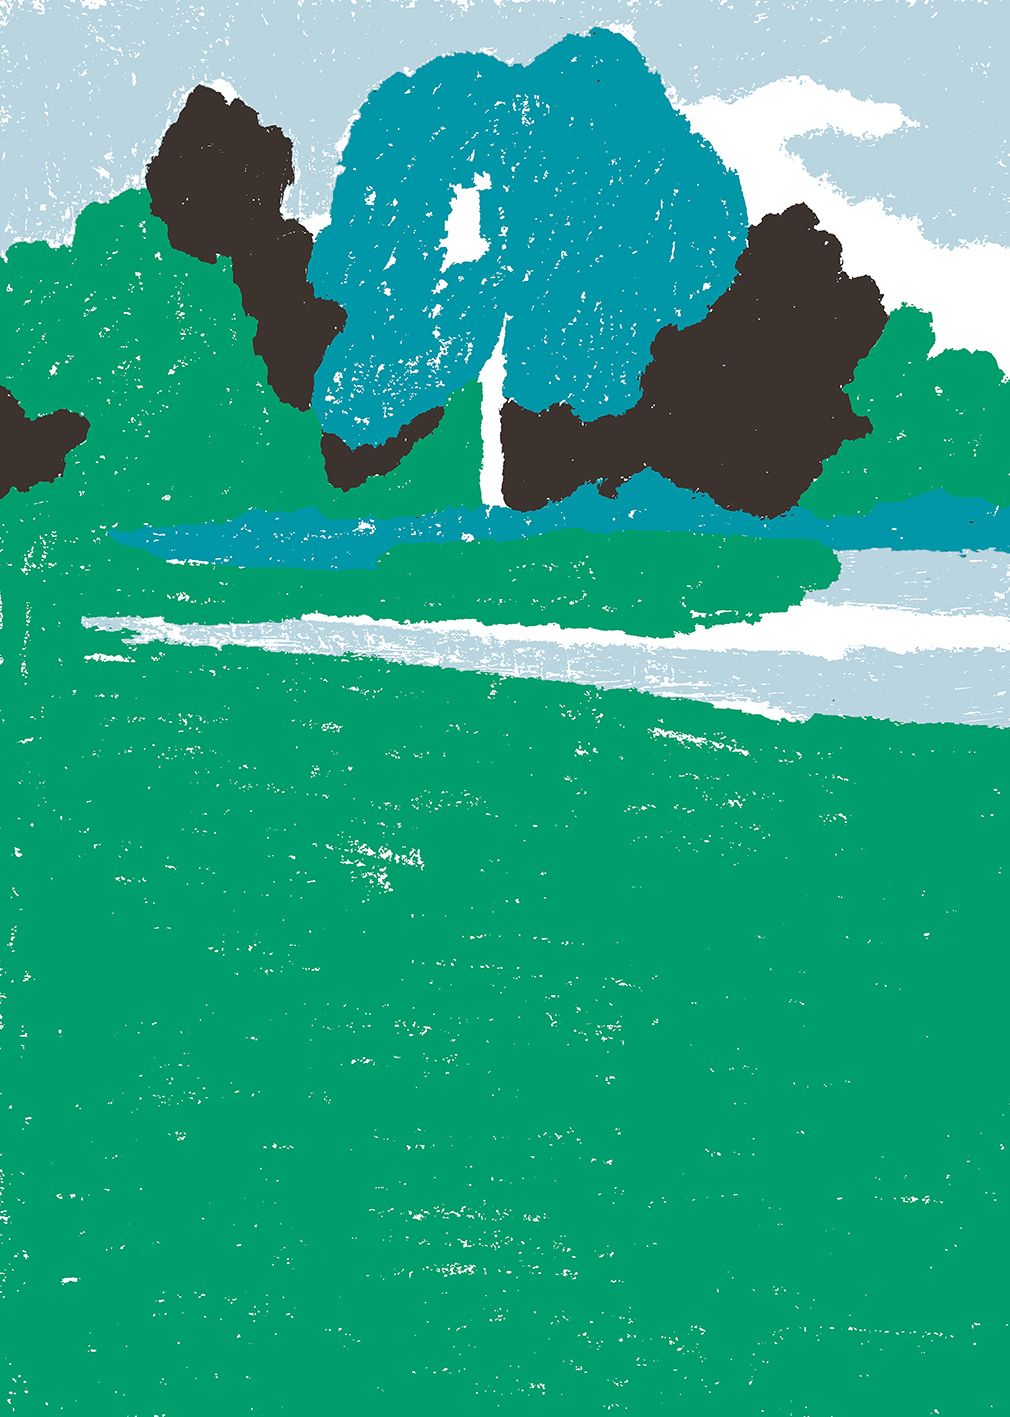 Charlotte-Trounce-2020-Inverleith-Park-4-color-screenprint-cm.-70-x-50